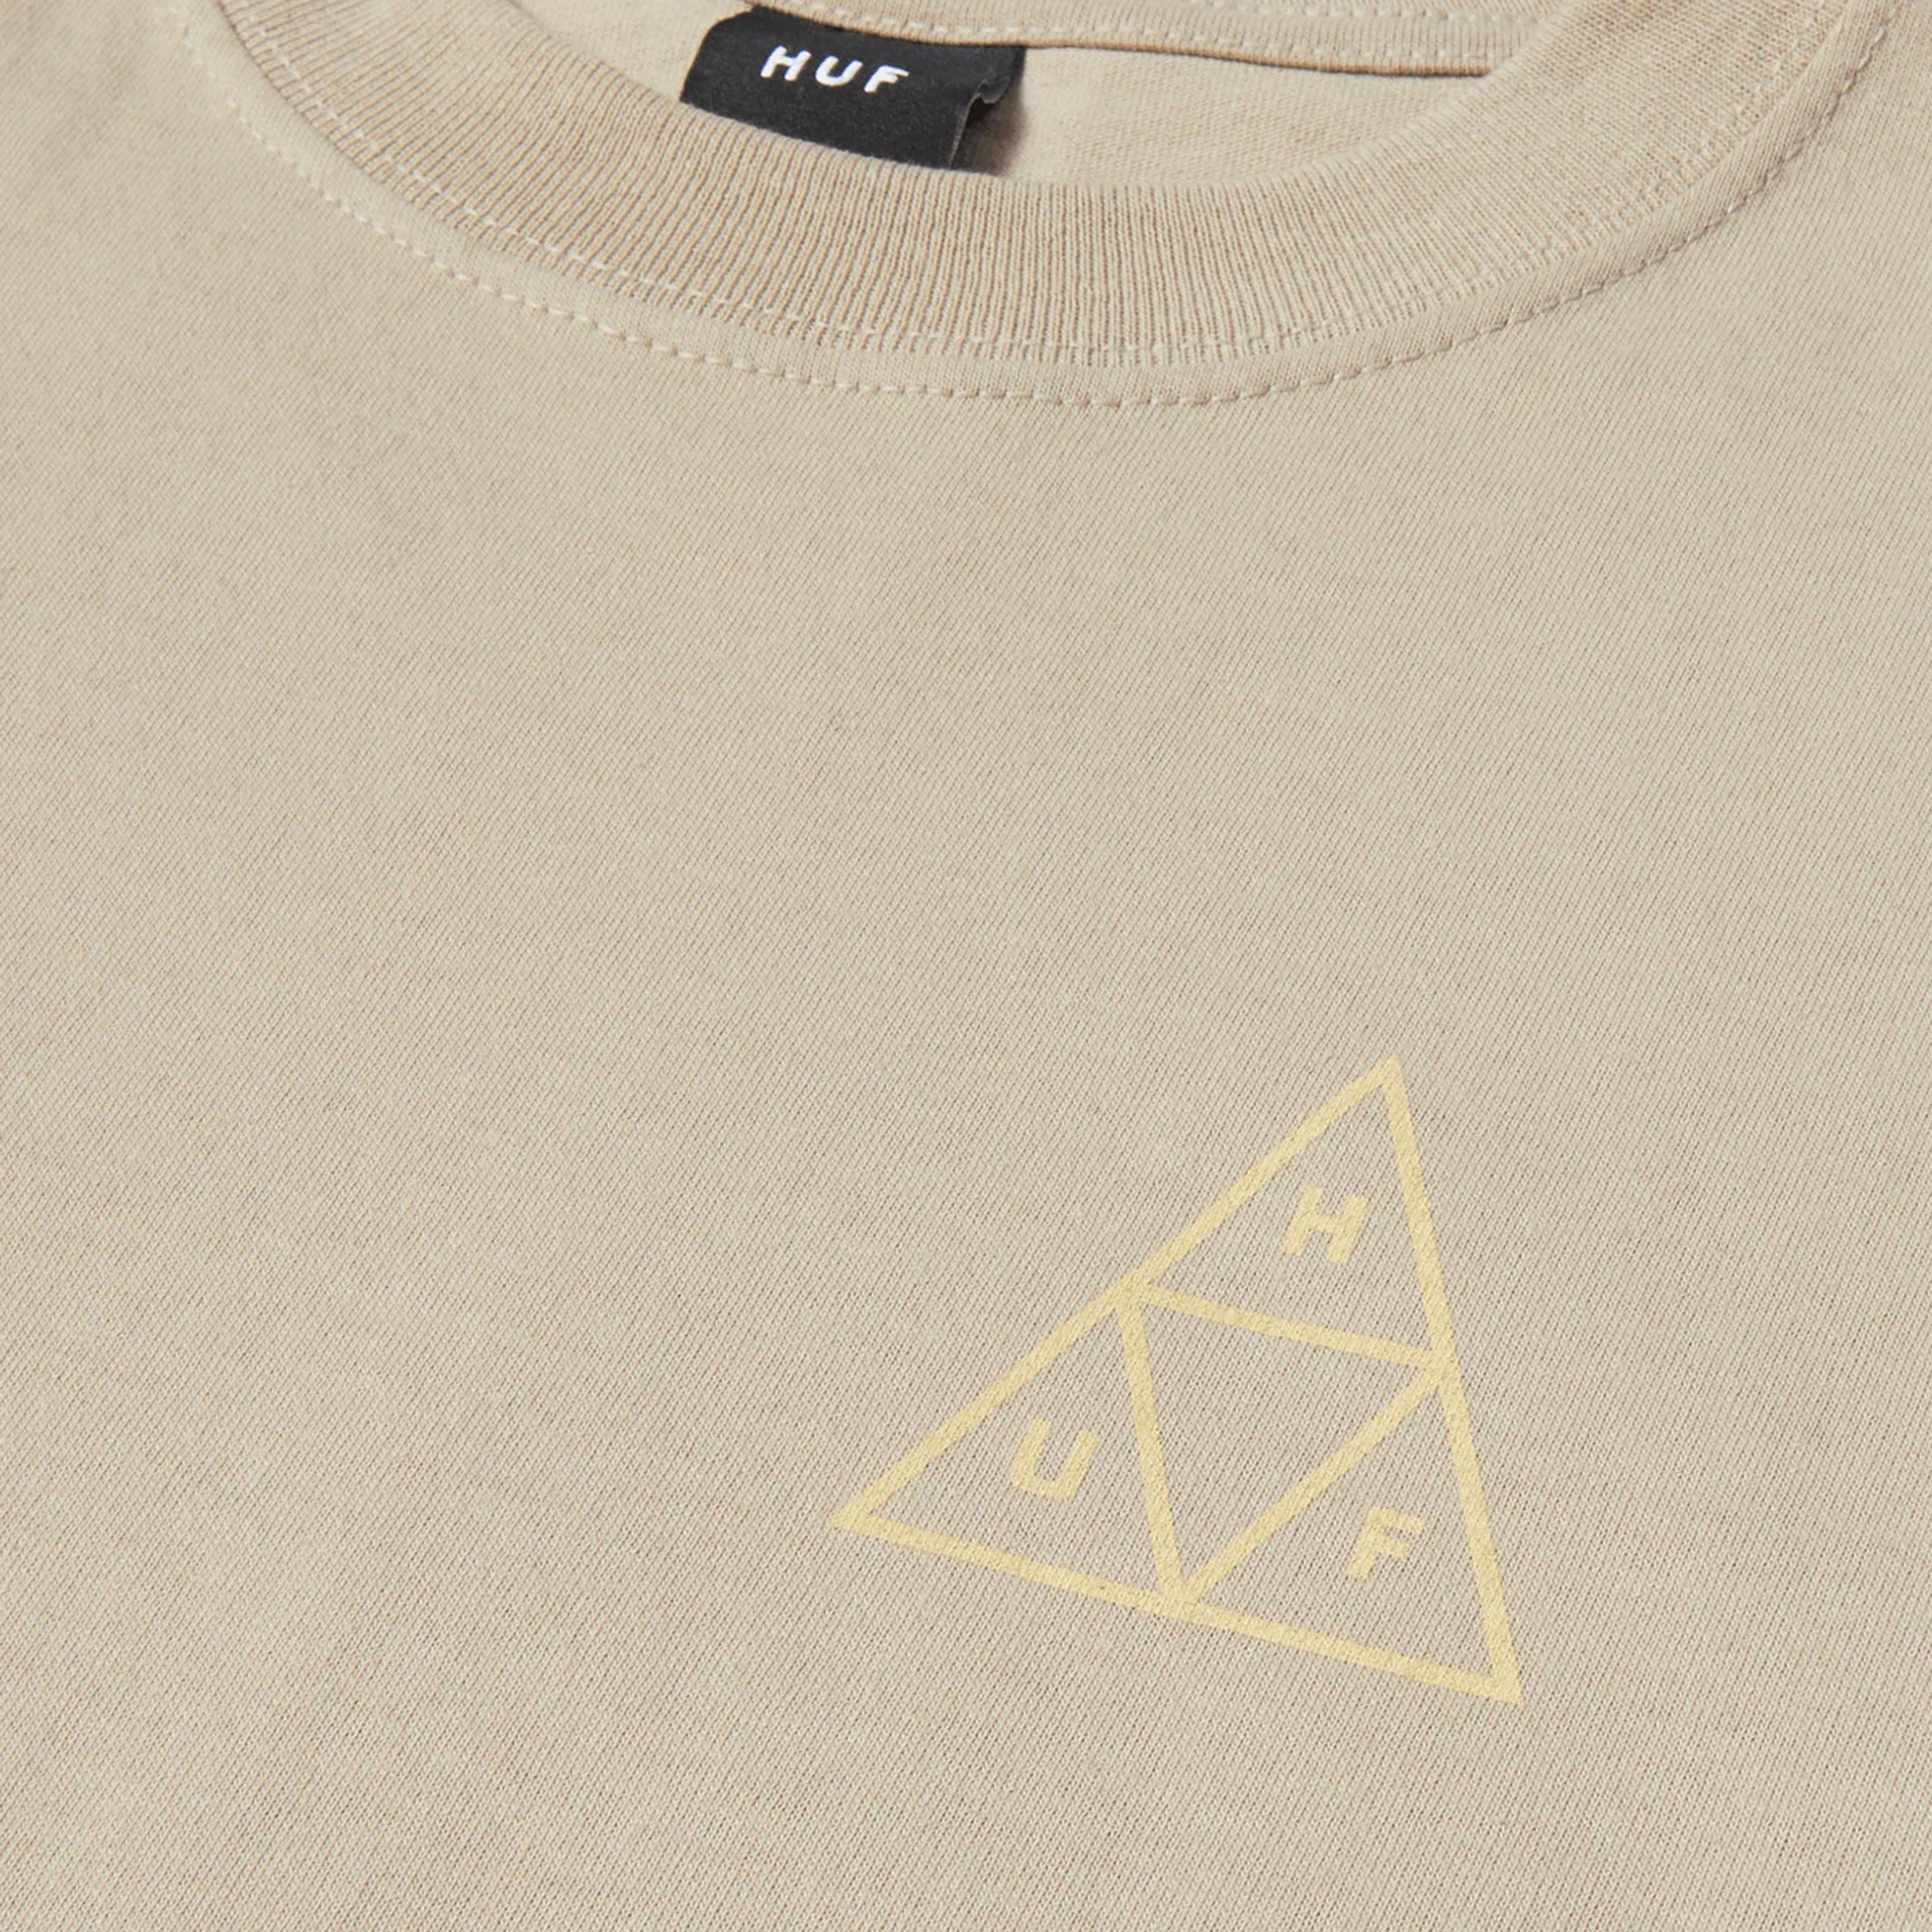 Huf Set Triple Triangle T-Shirt Clay